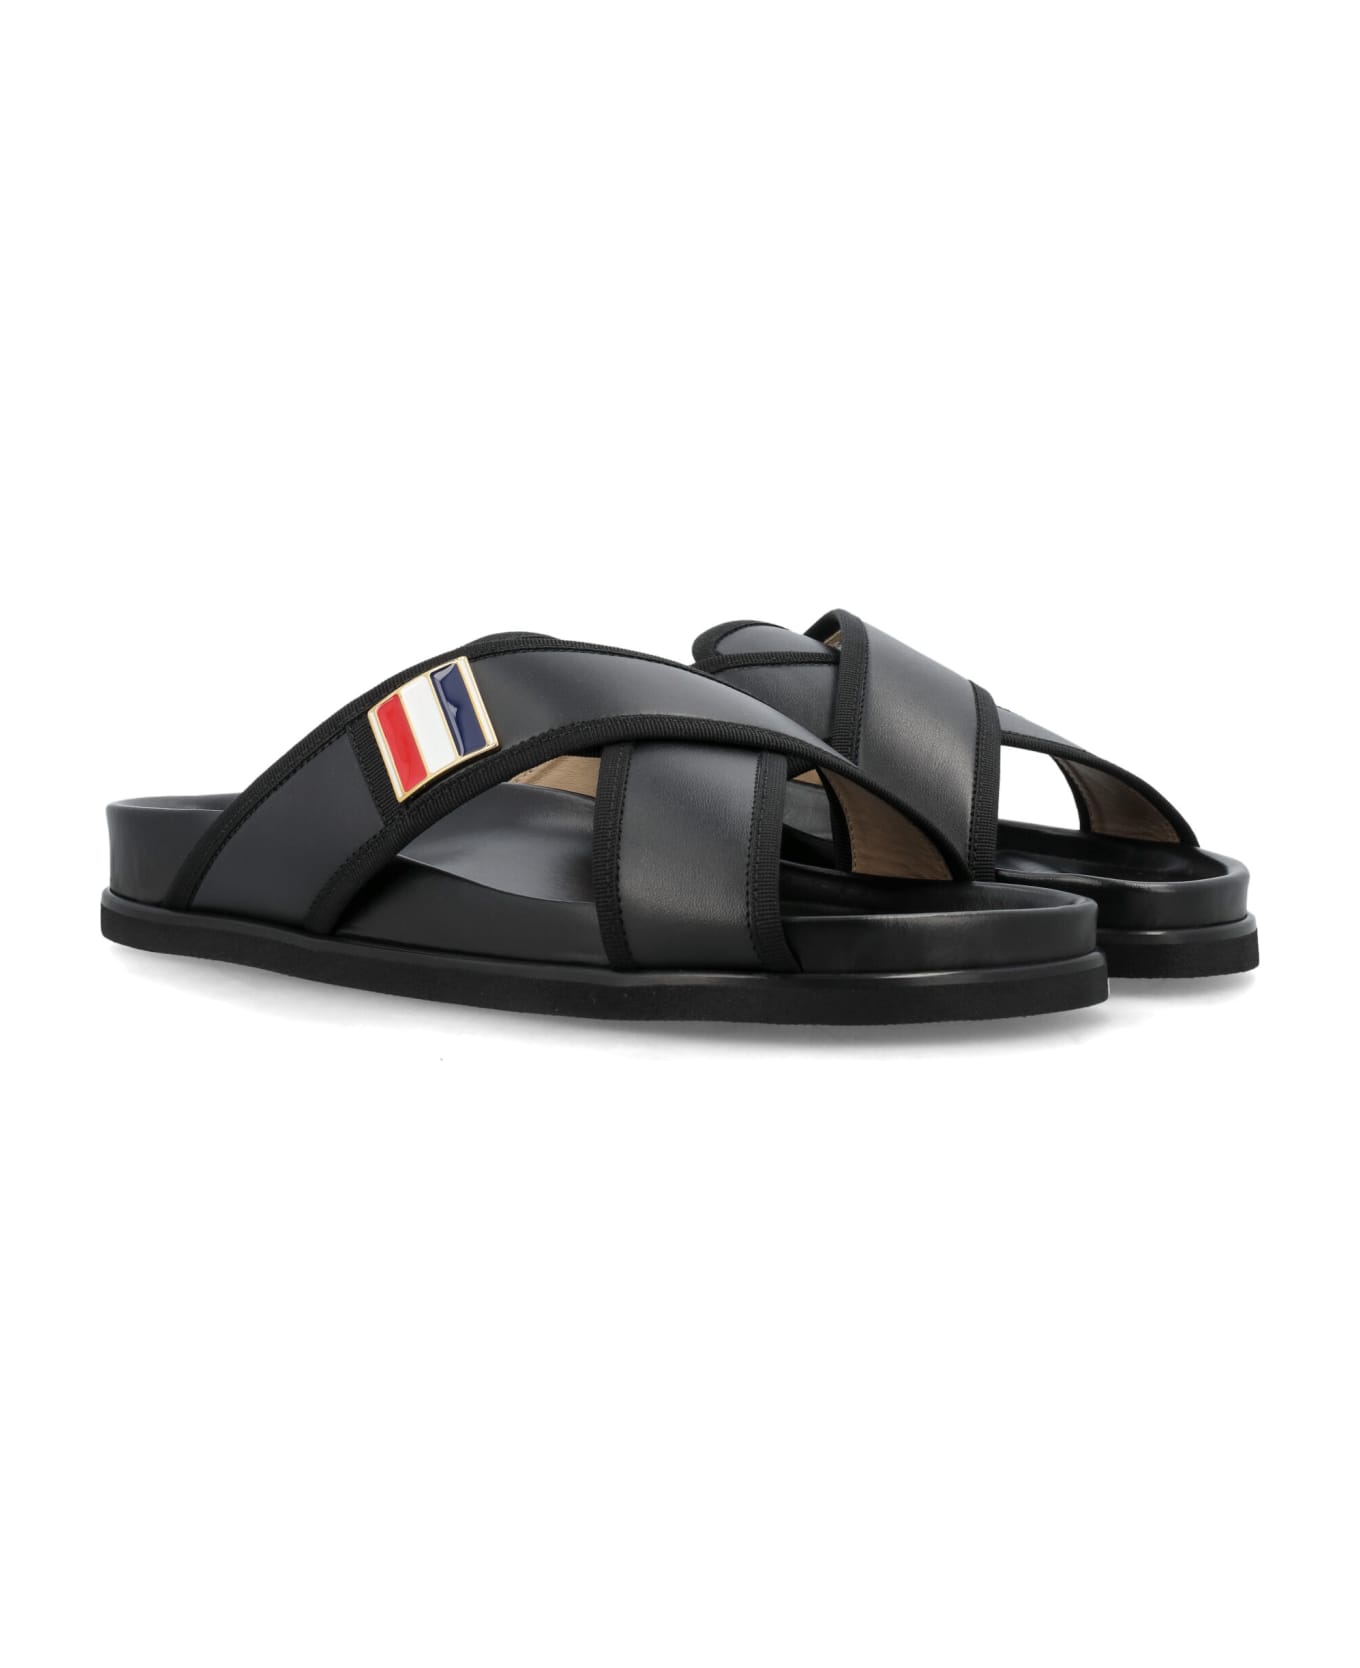 Thom Browne Criss Cross Loafer Sandal - Black